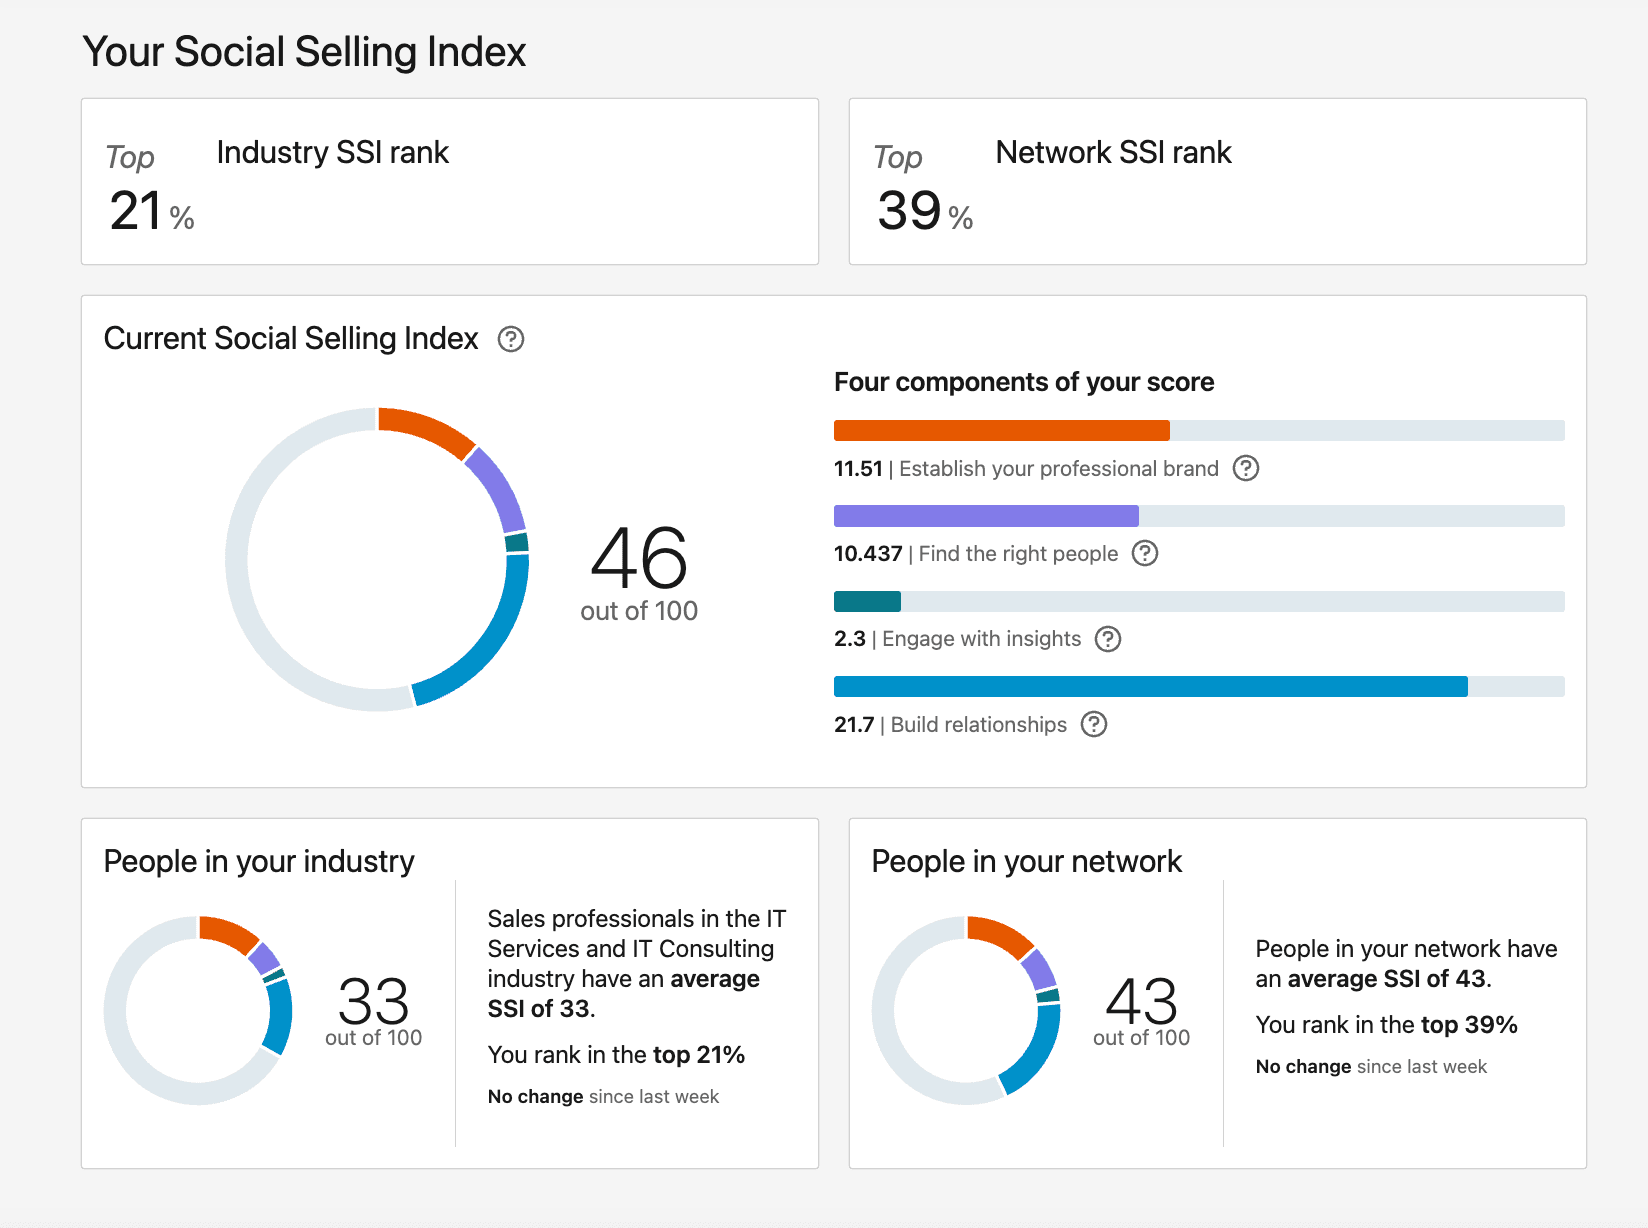 social selling index screenshot - image9.png